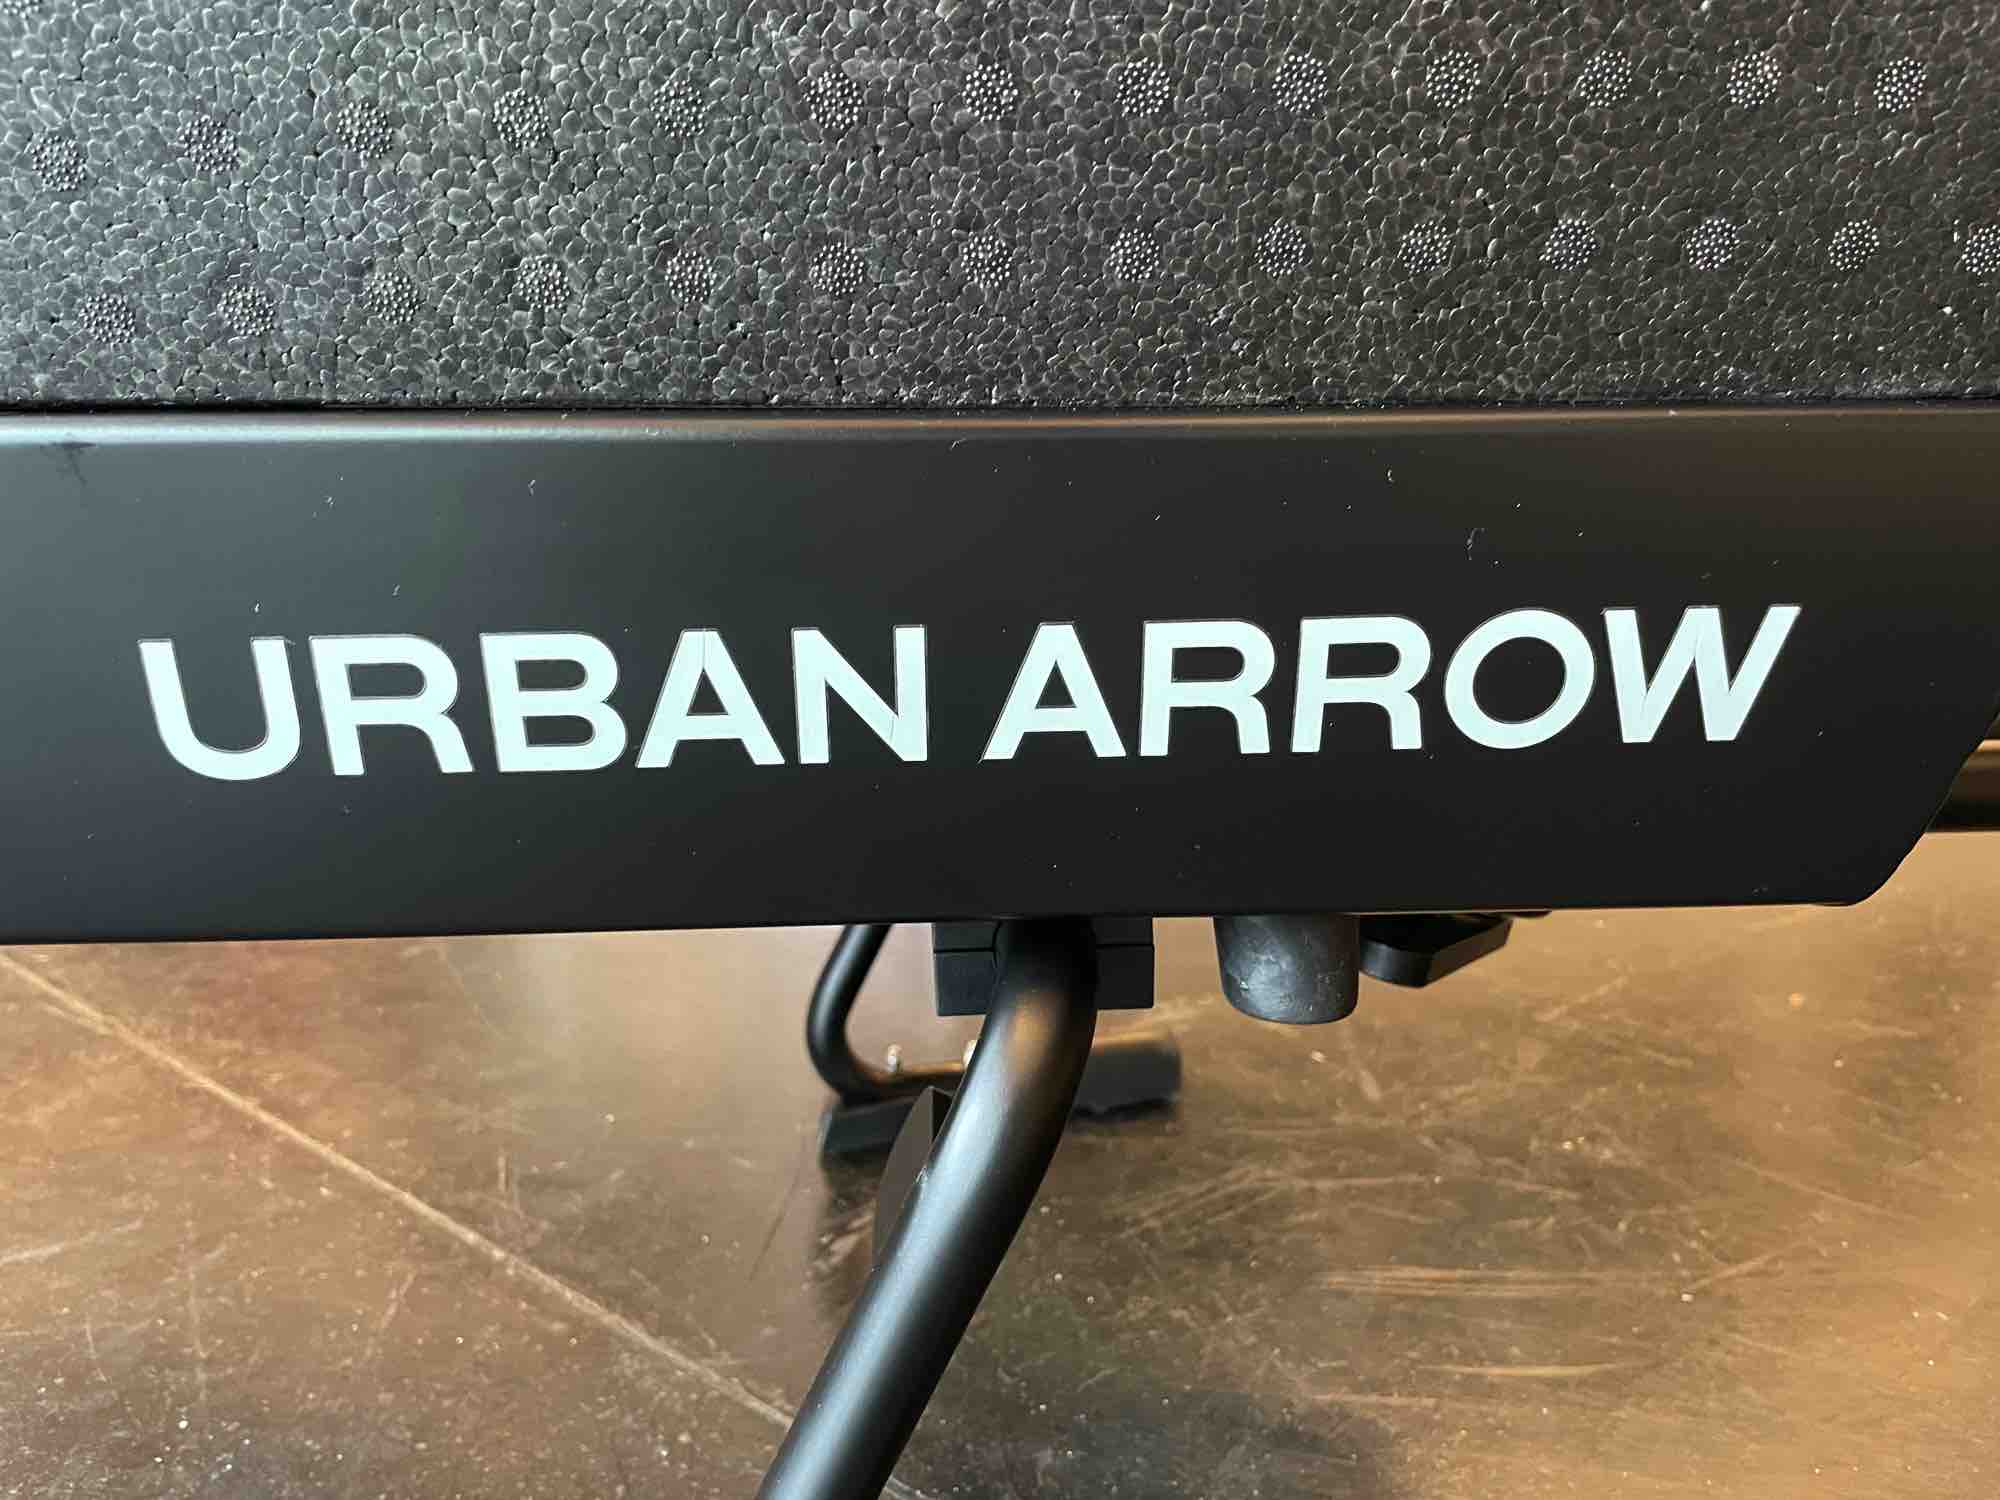 Urban Arrow Family Cargo eBike, Enviolo, 